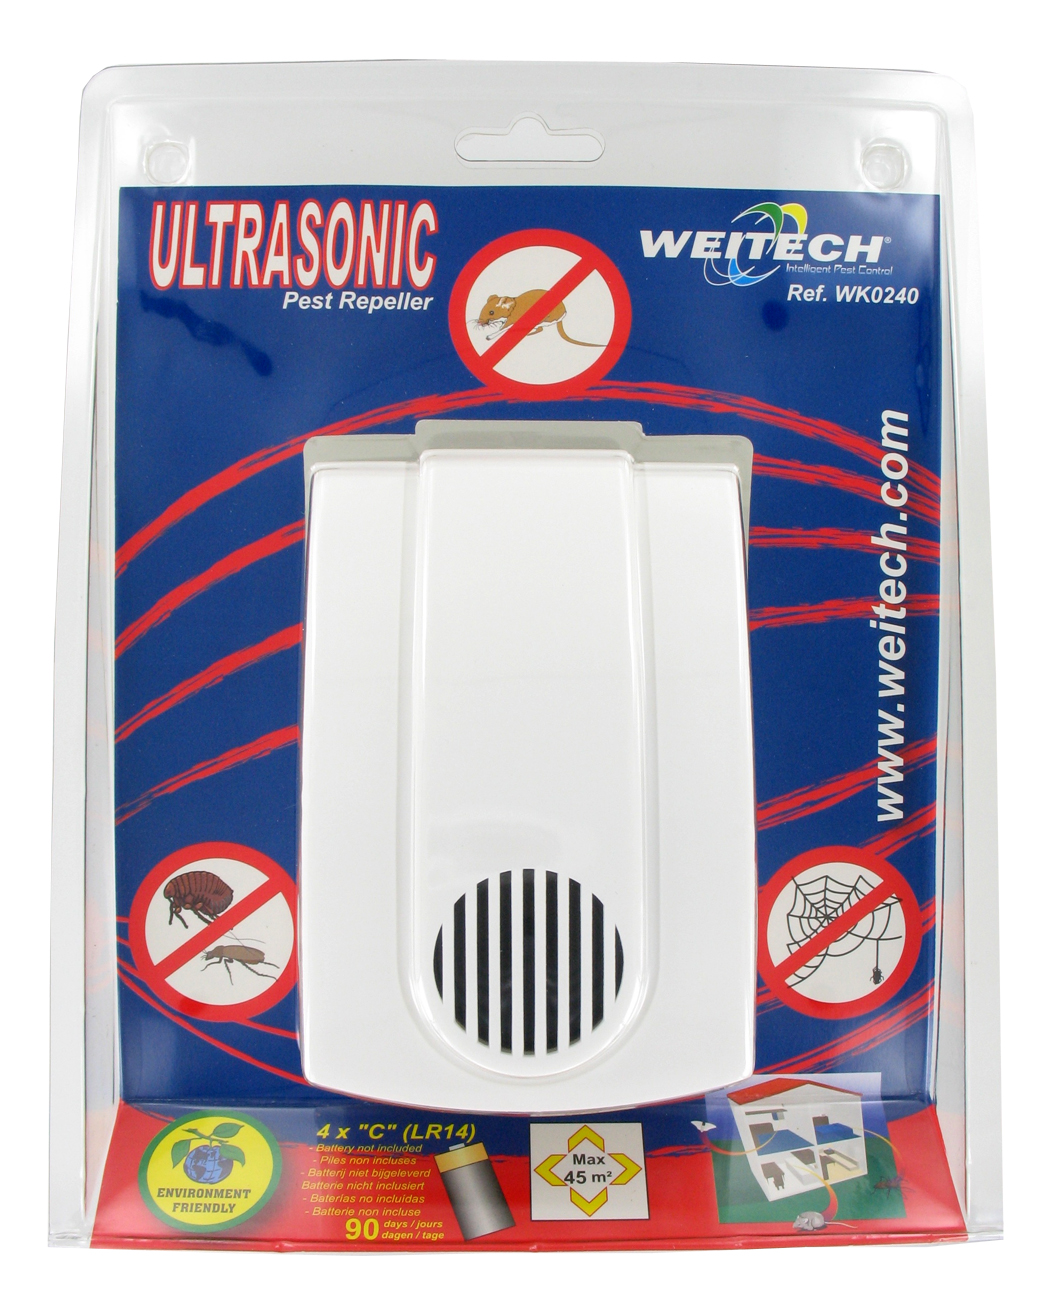 Ultrasonic pest alarm 60m2 Weitech